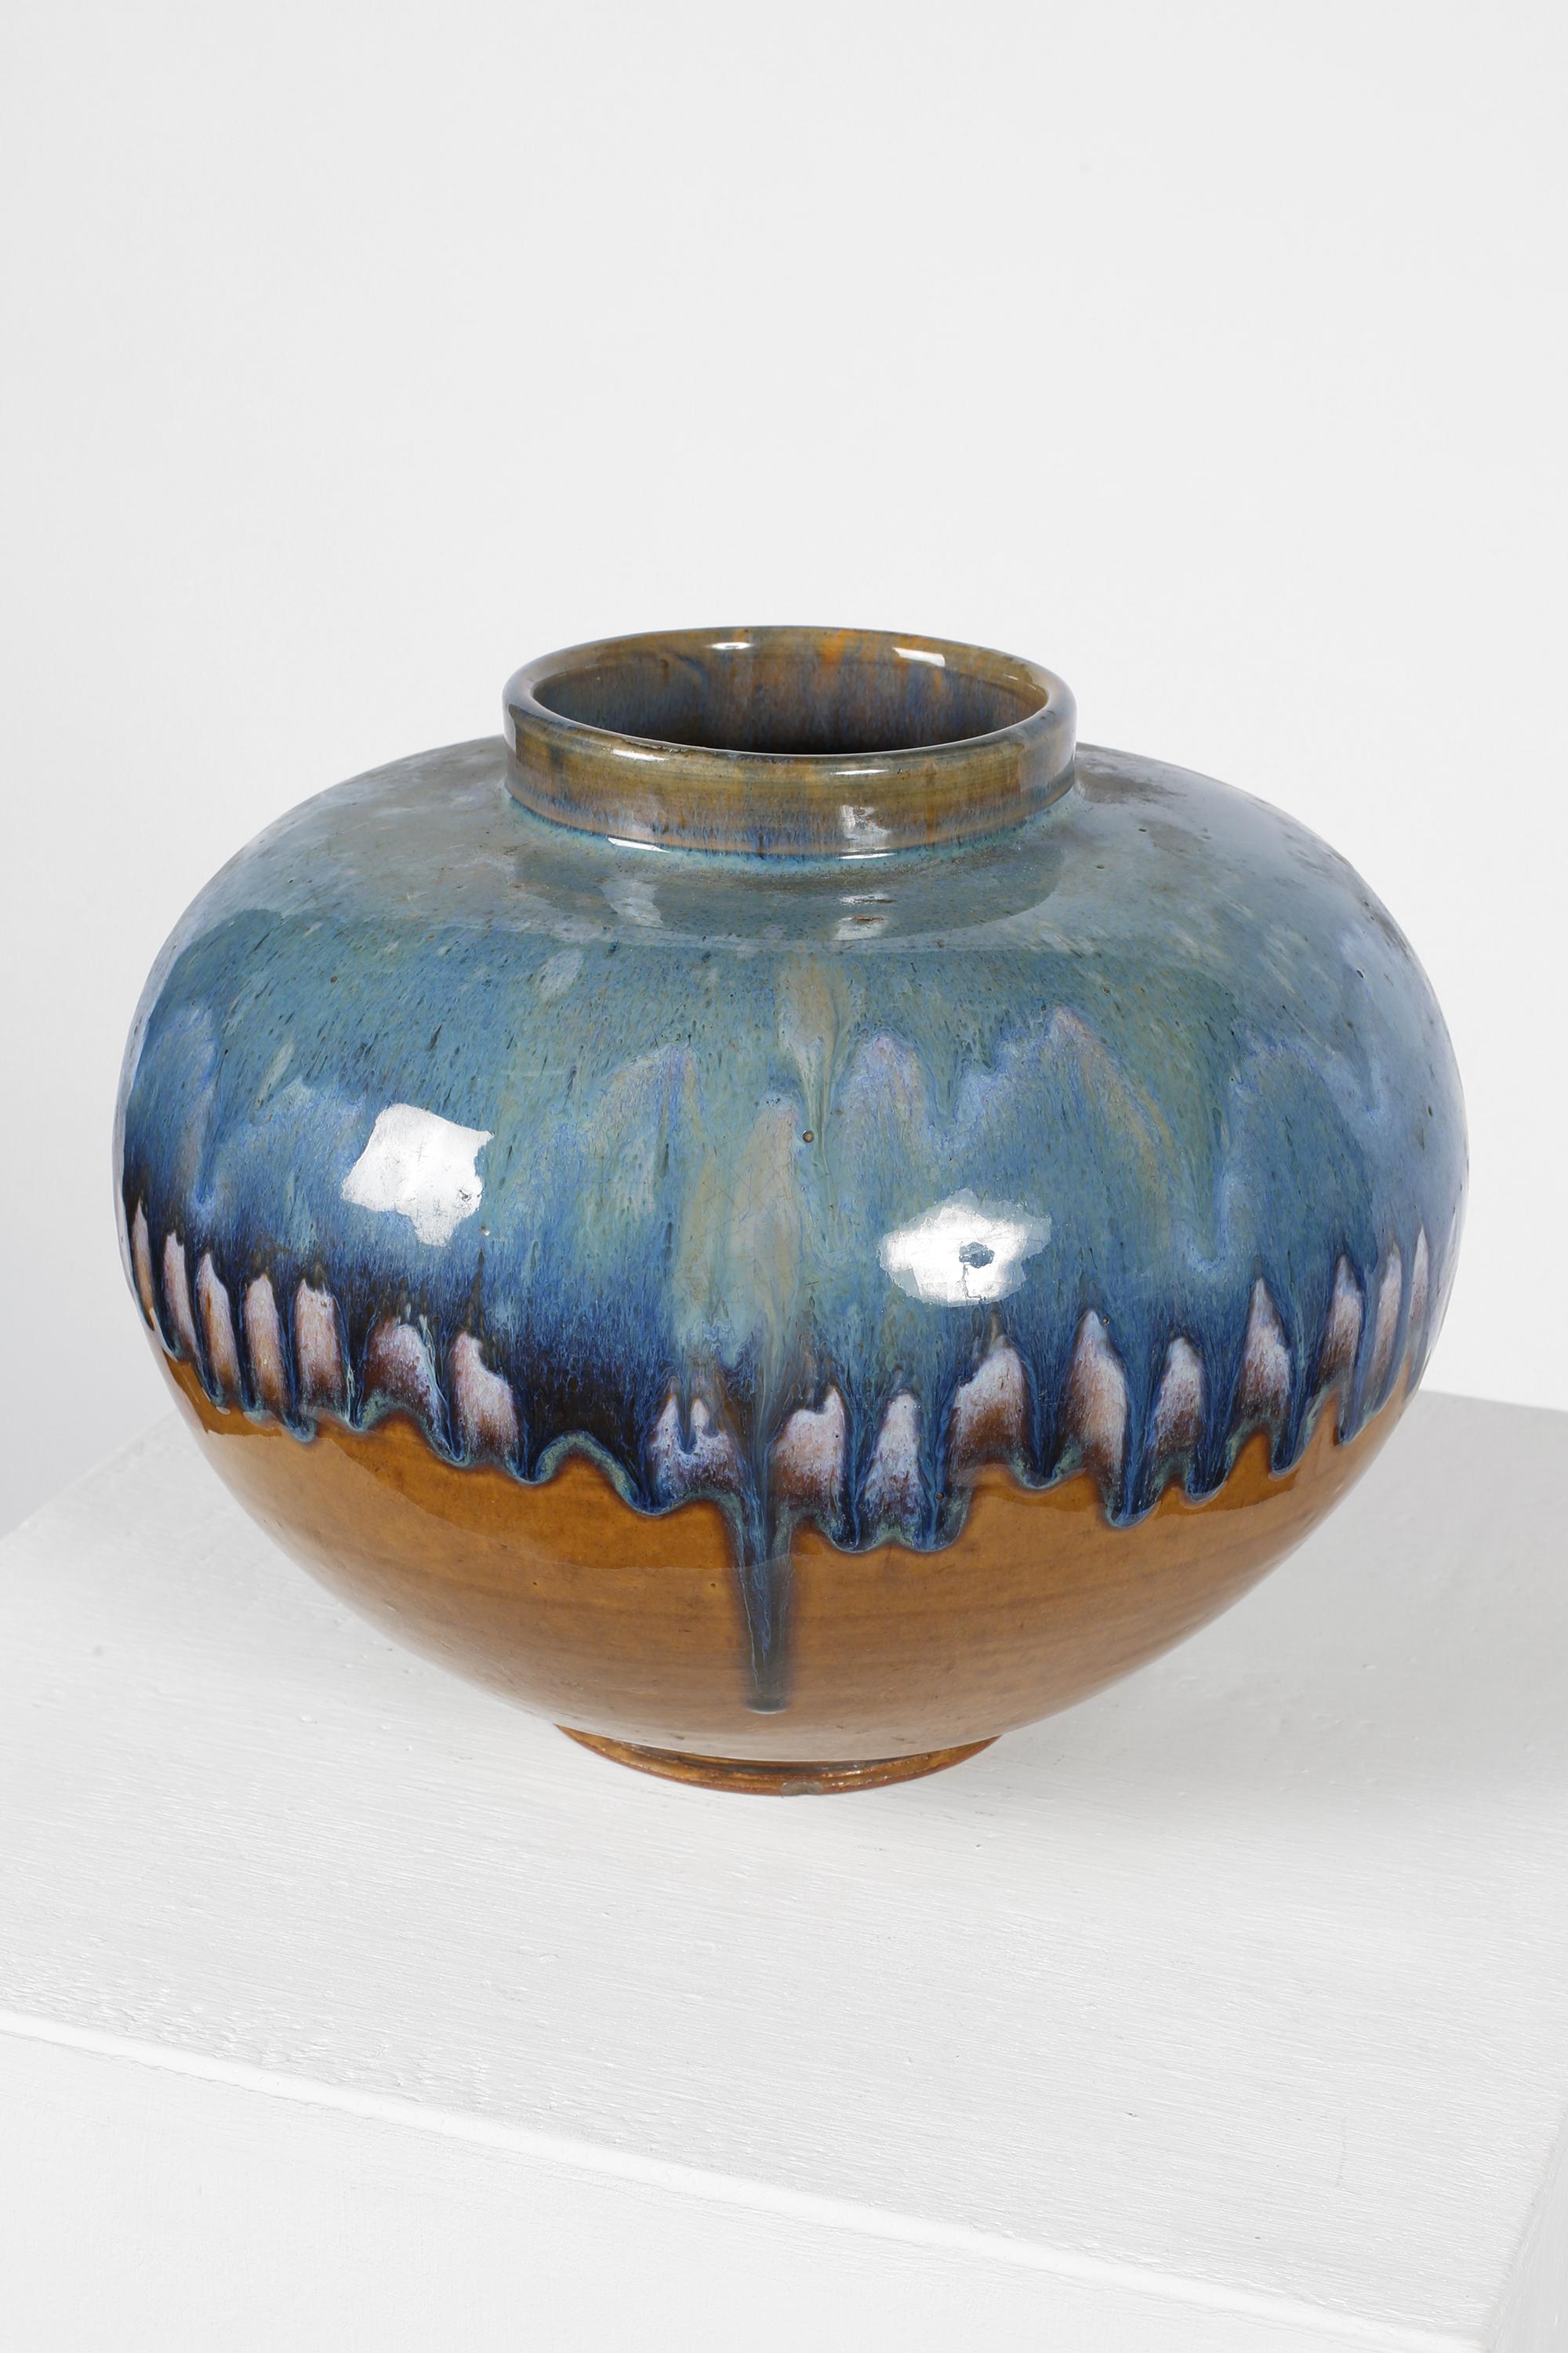 A large Shōwa era ceramic vase with mottled blue and tan drip glaze. Japanese, c. 1960s.